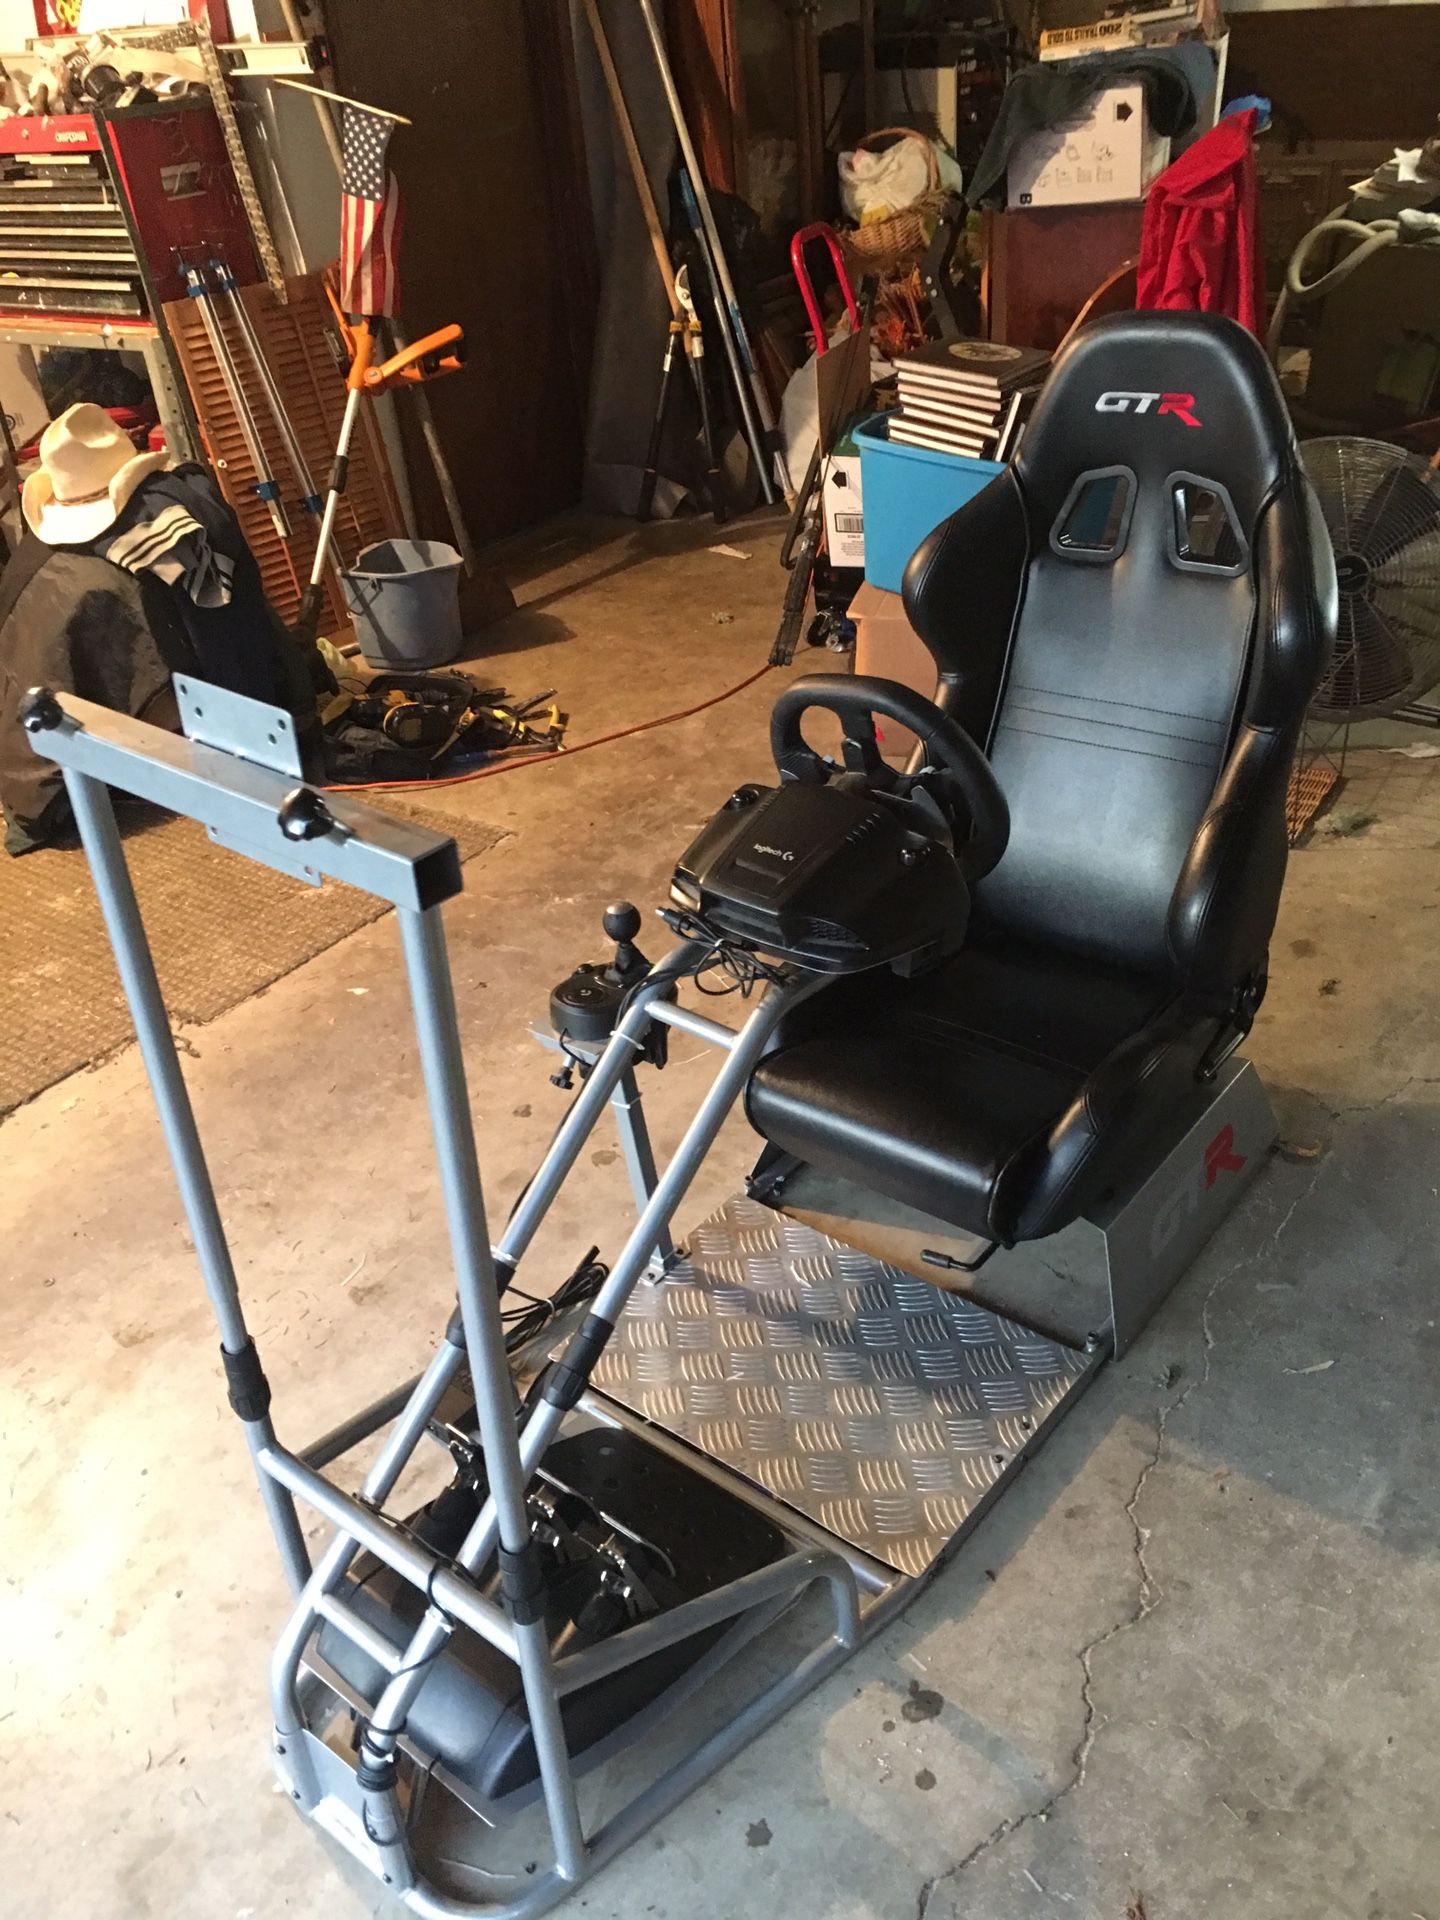 GTR 920 simulator racing seat, racing wheel and shifter